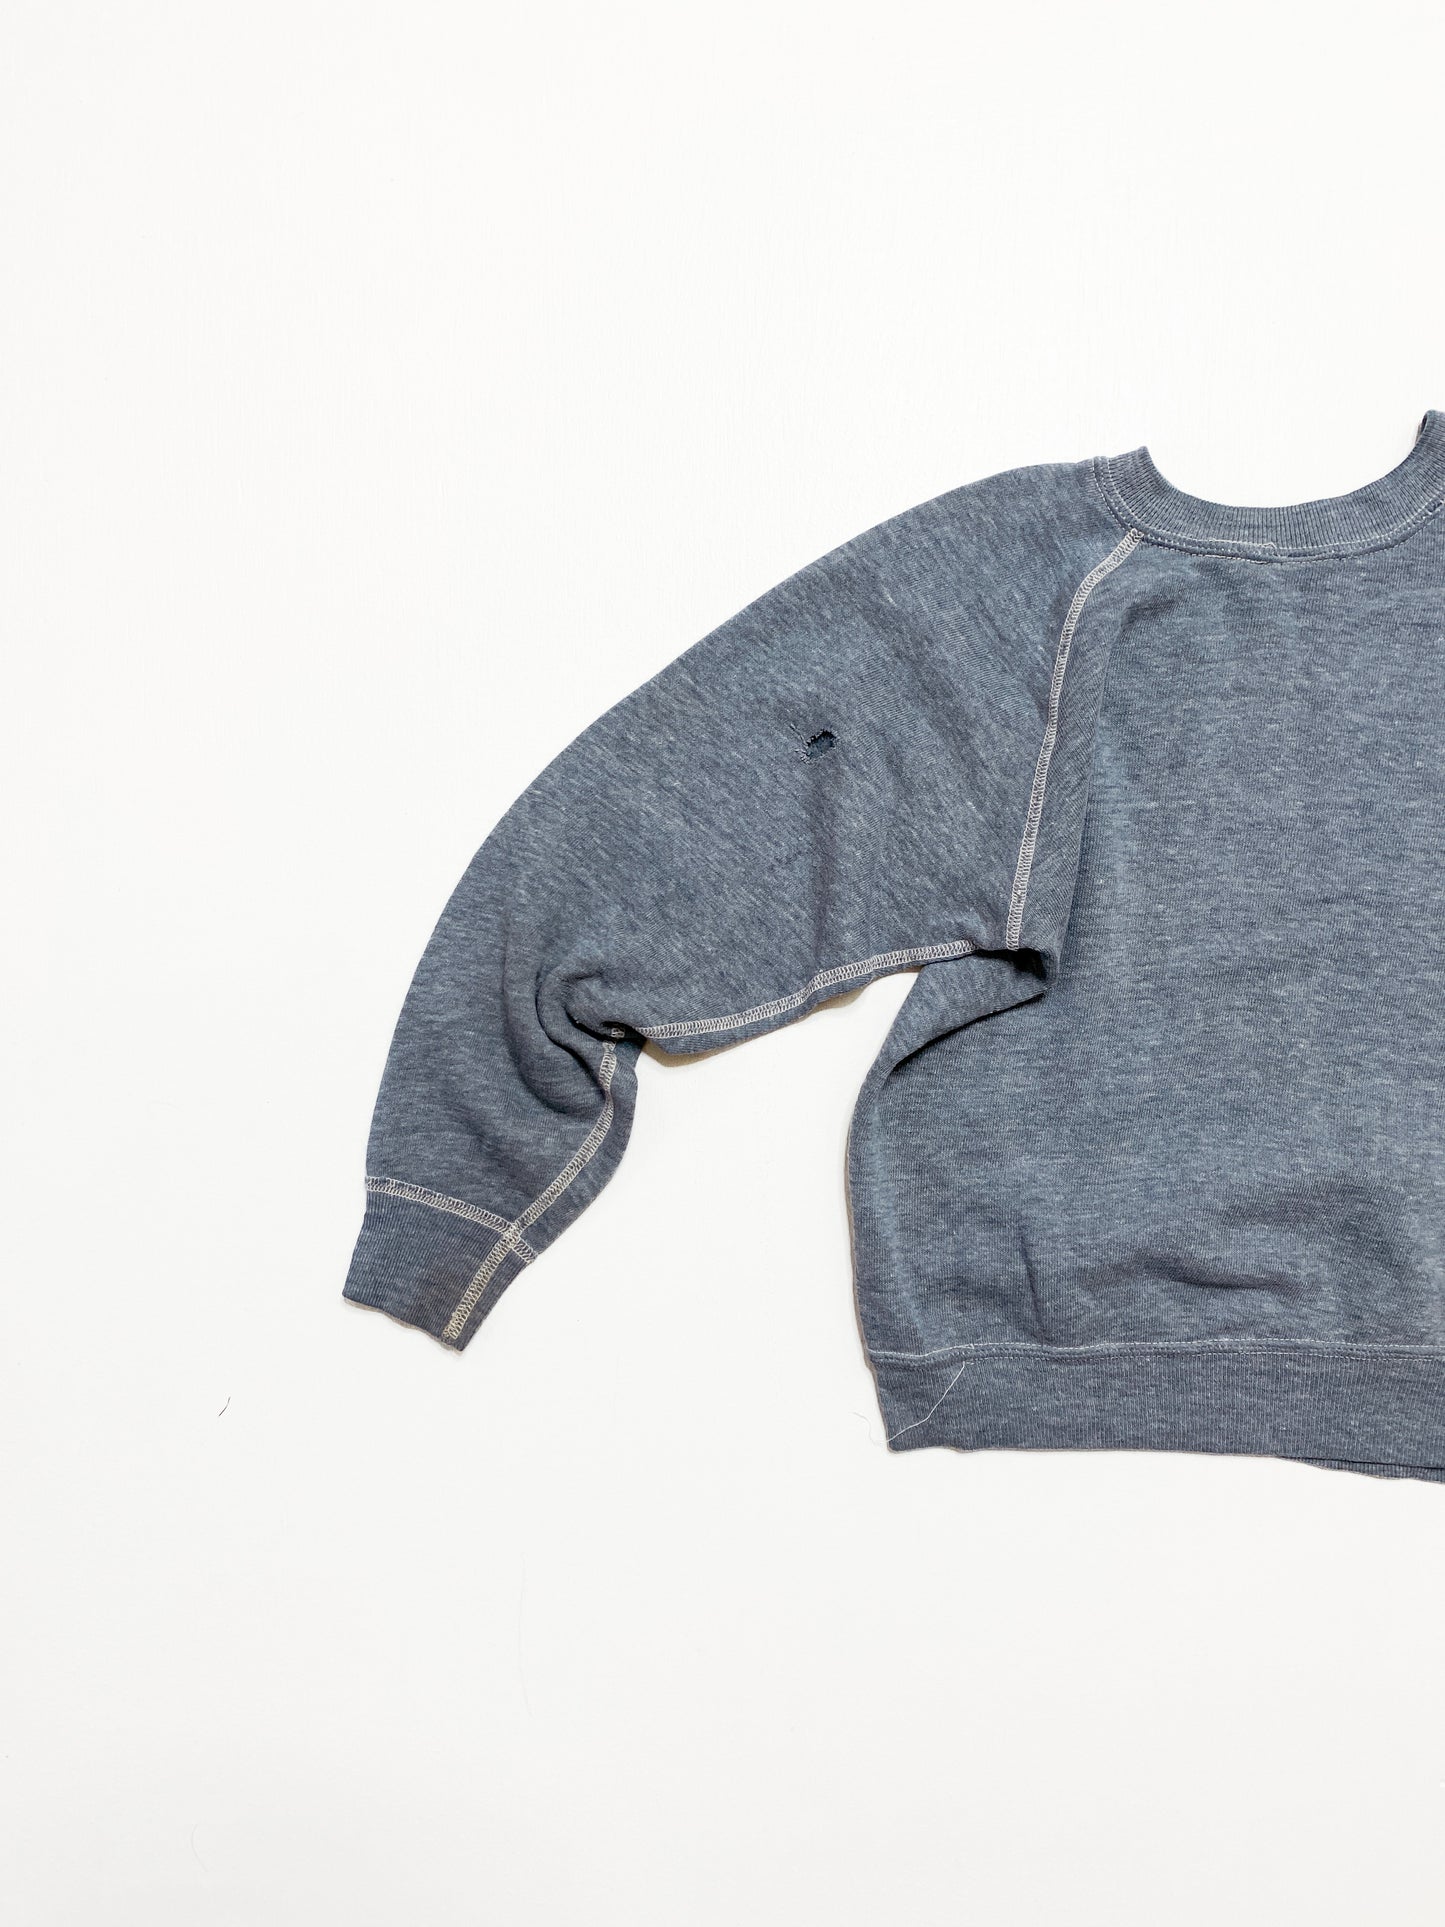 1950’s Penny’s Crewneck Sweatshirt